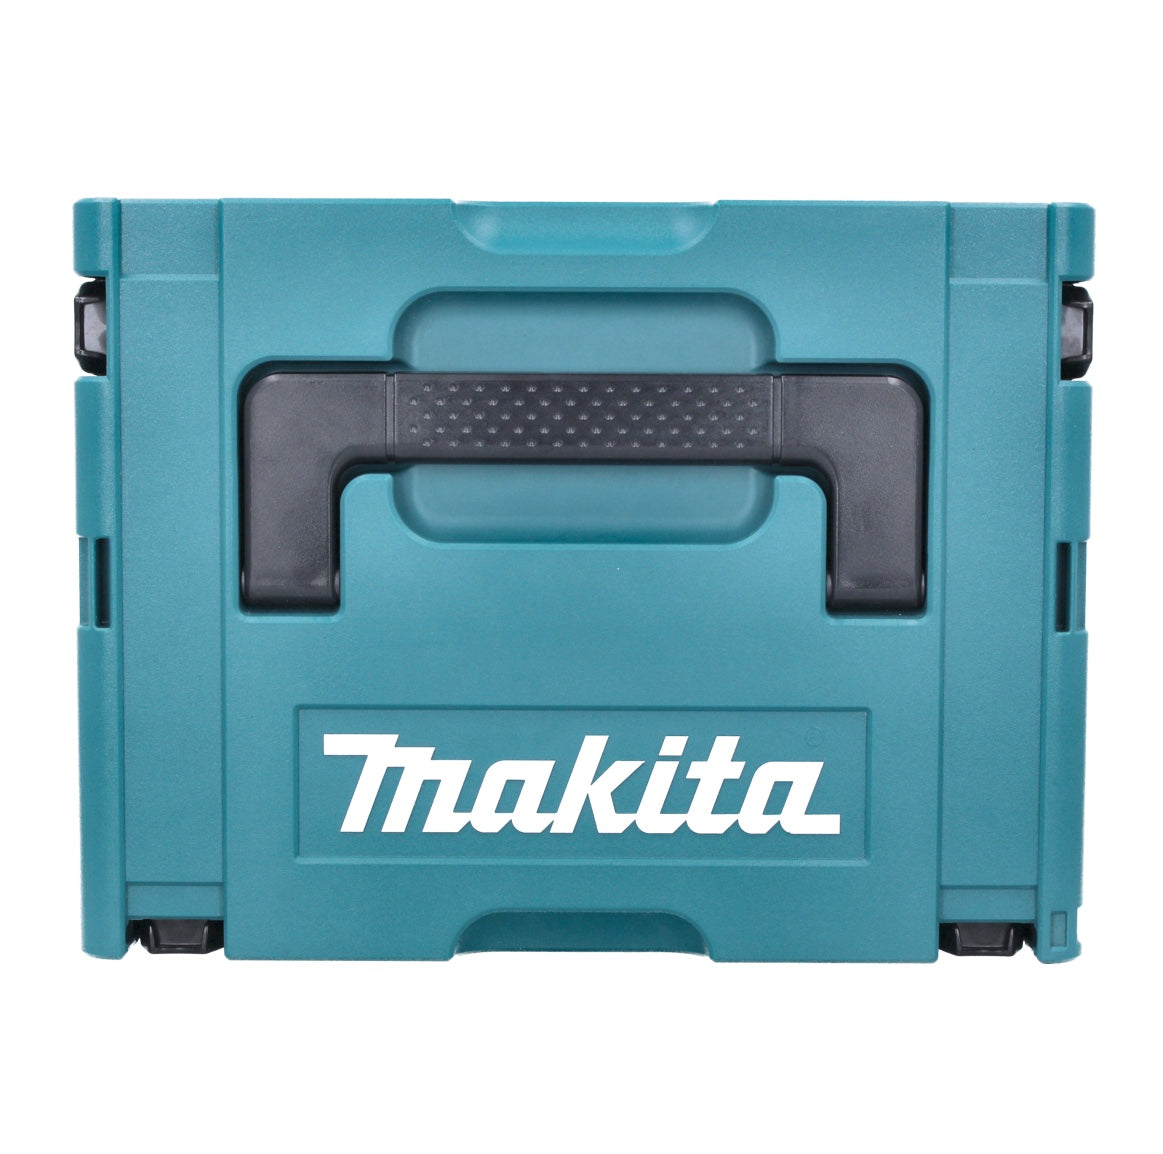 Makita DTD 152 F1J Akku Schlagschrauber 18 V 165Nm + 1x Akku 3,0Ah + Makpac - ohne Ladegerät - Toolbrothers